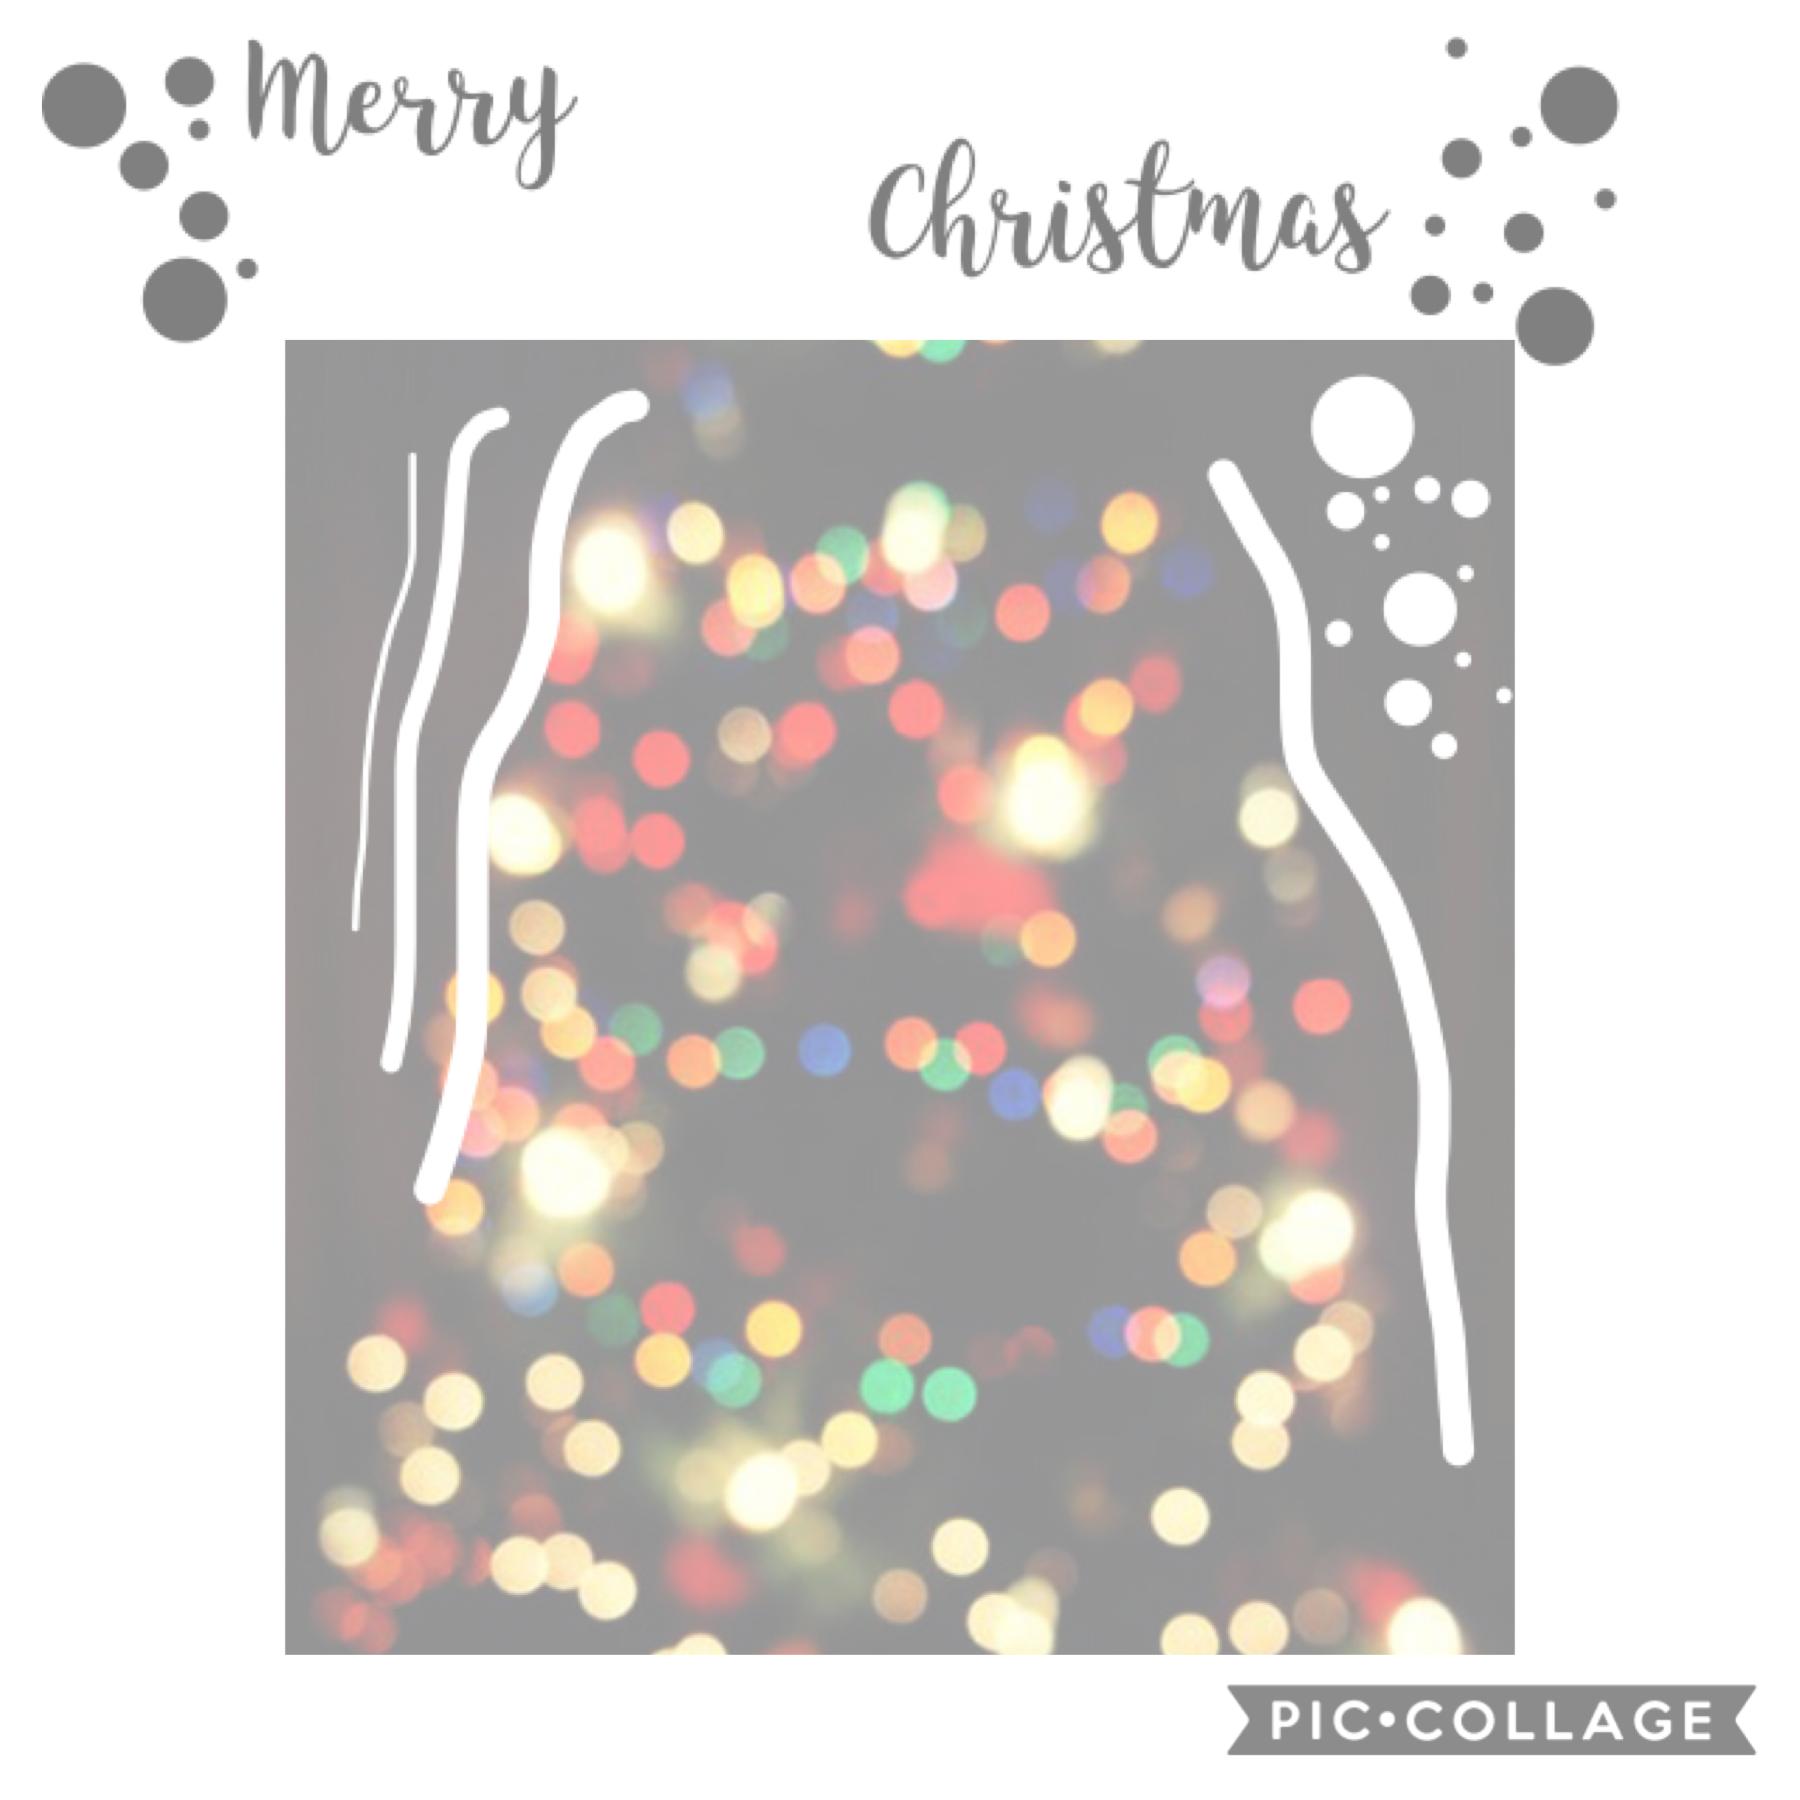 Merry Christmas 🎄 